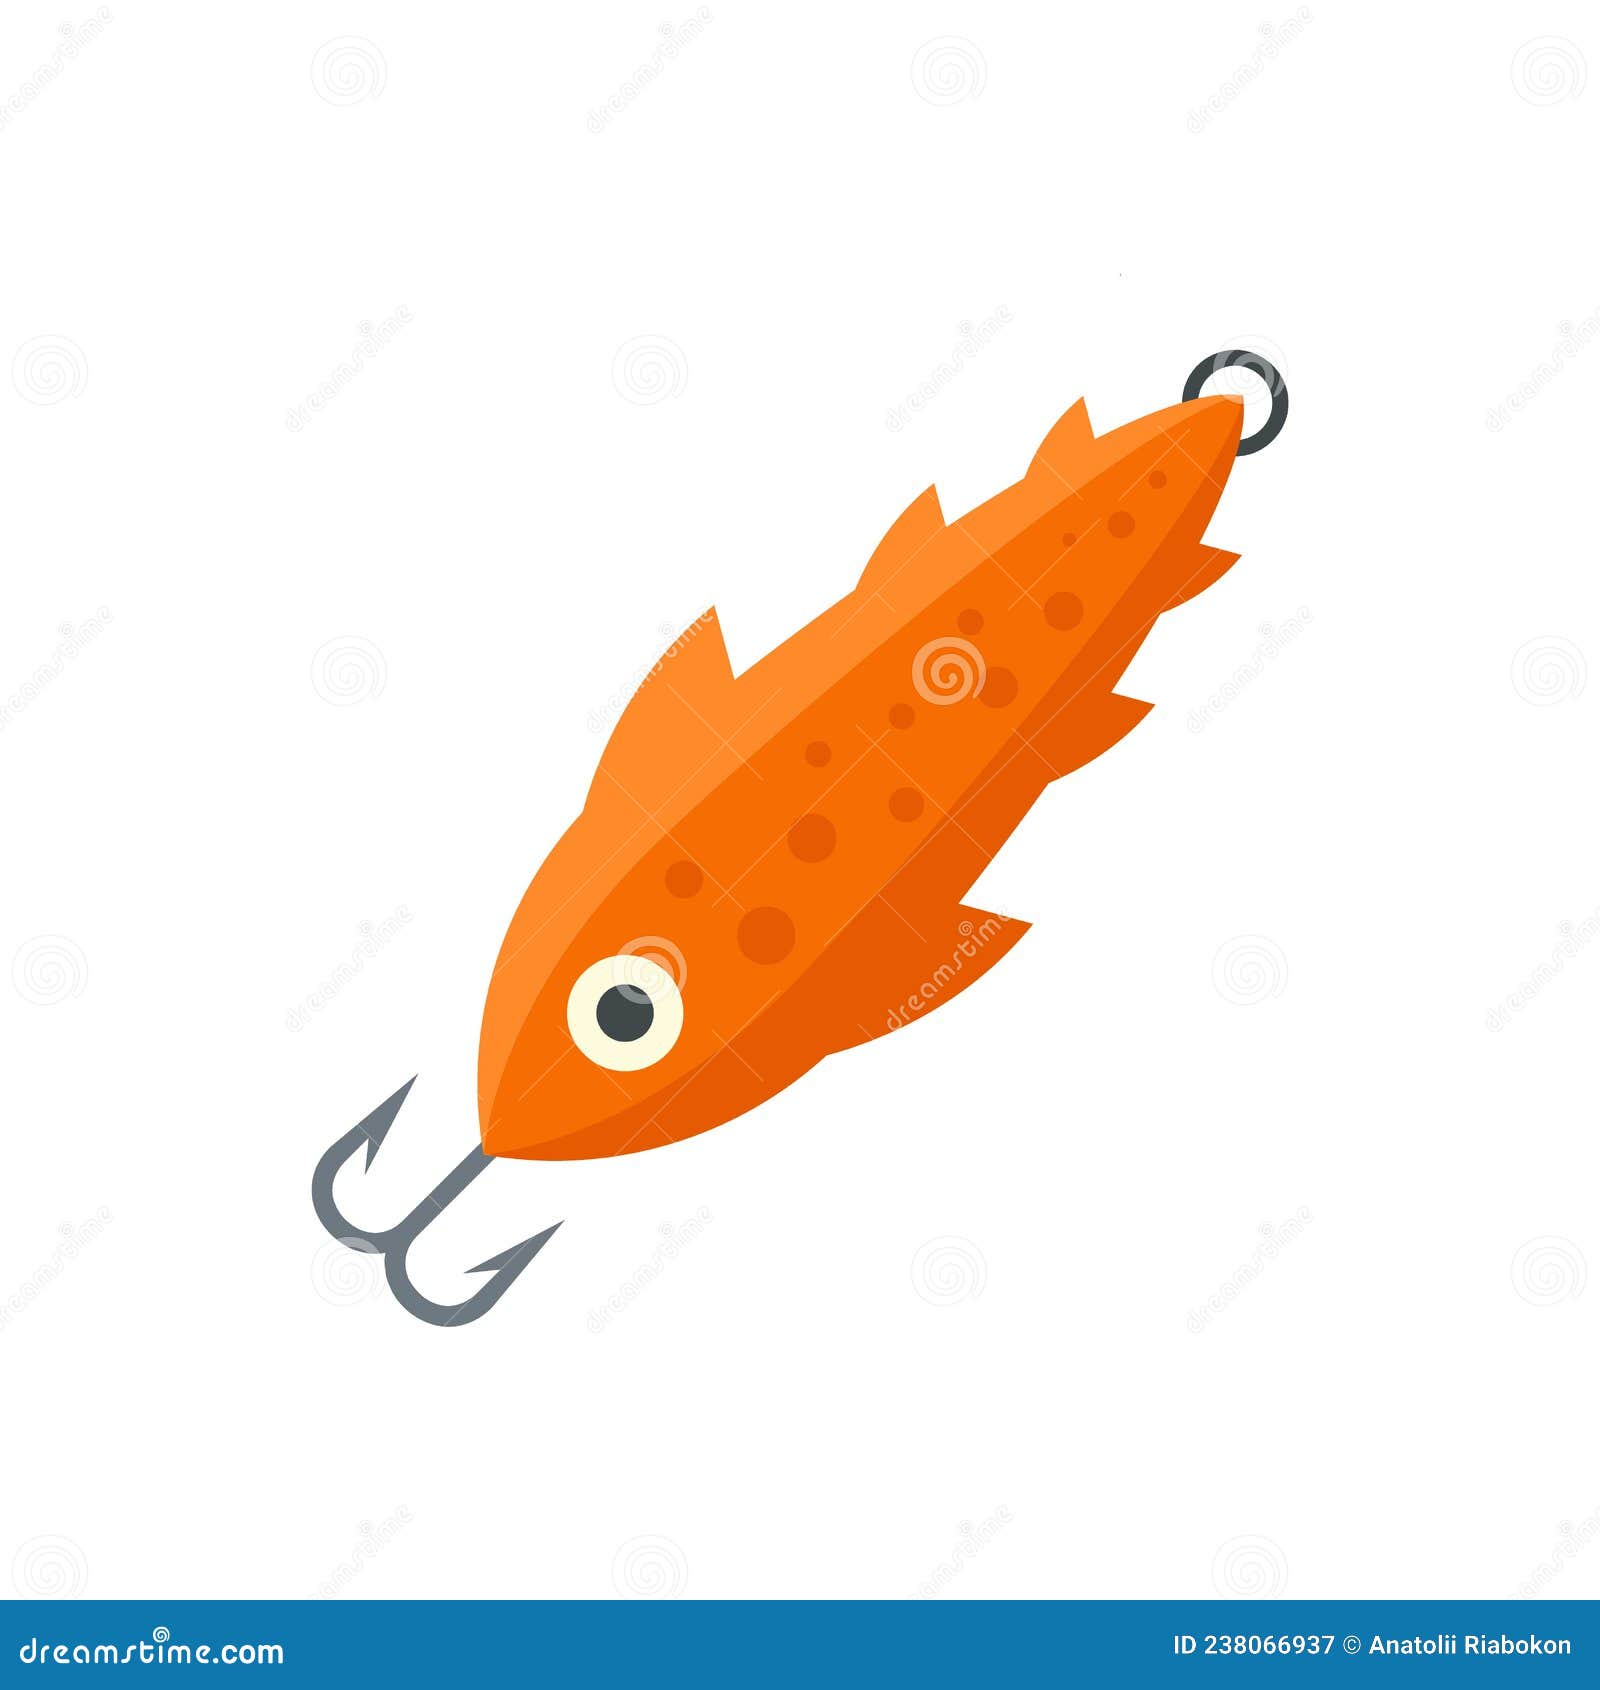 https://thumbs.dreamstime.com/z/fish-bait-diving-icon-flat-isolated-vector-fish-bait-diving-icon-flat-illustration-fish-bait-diving-vector-icon-isolated-238066937.jpg